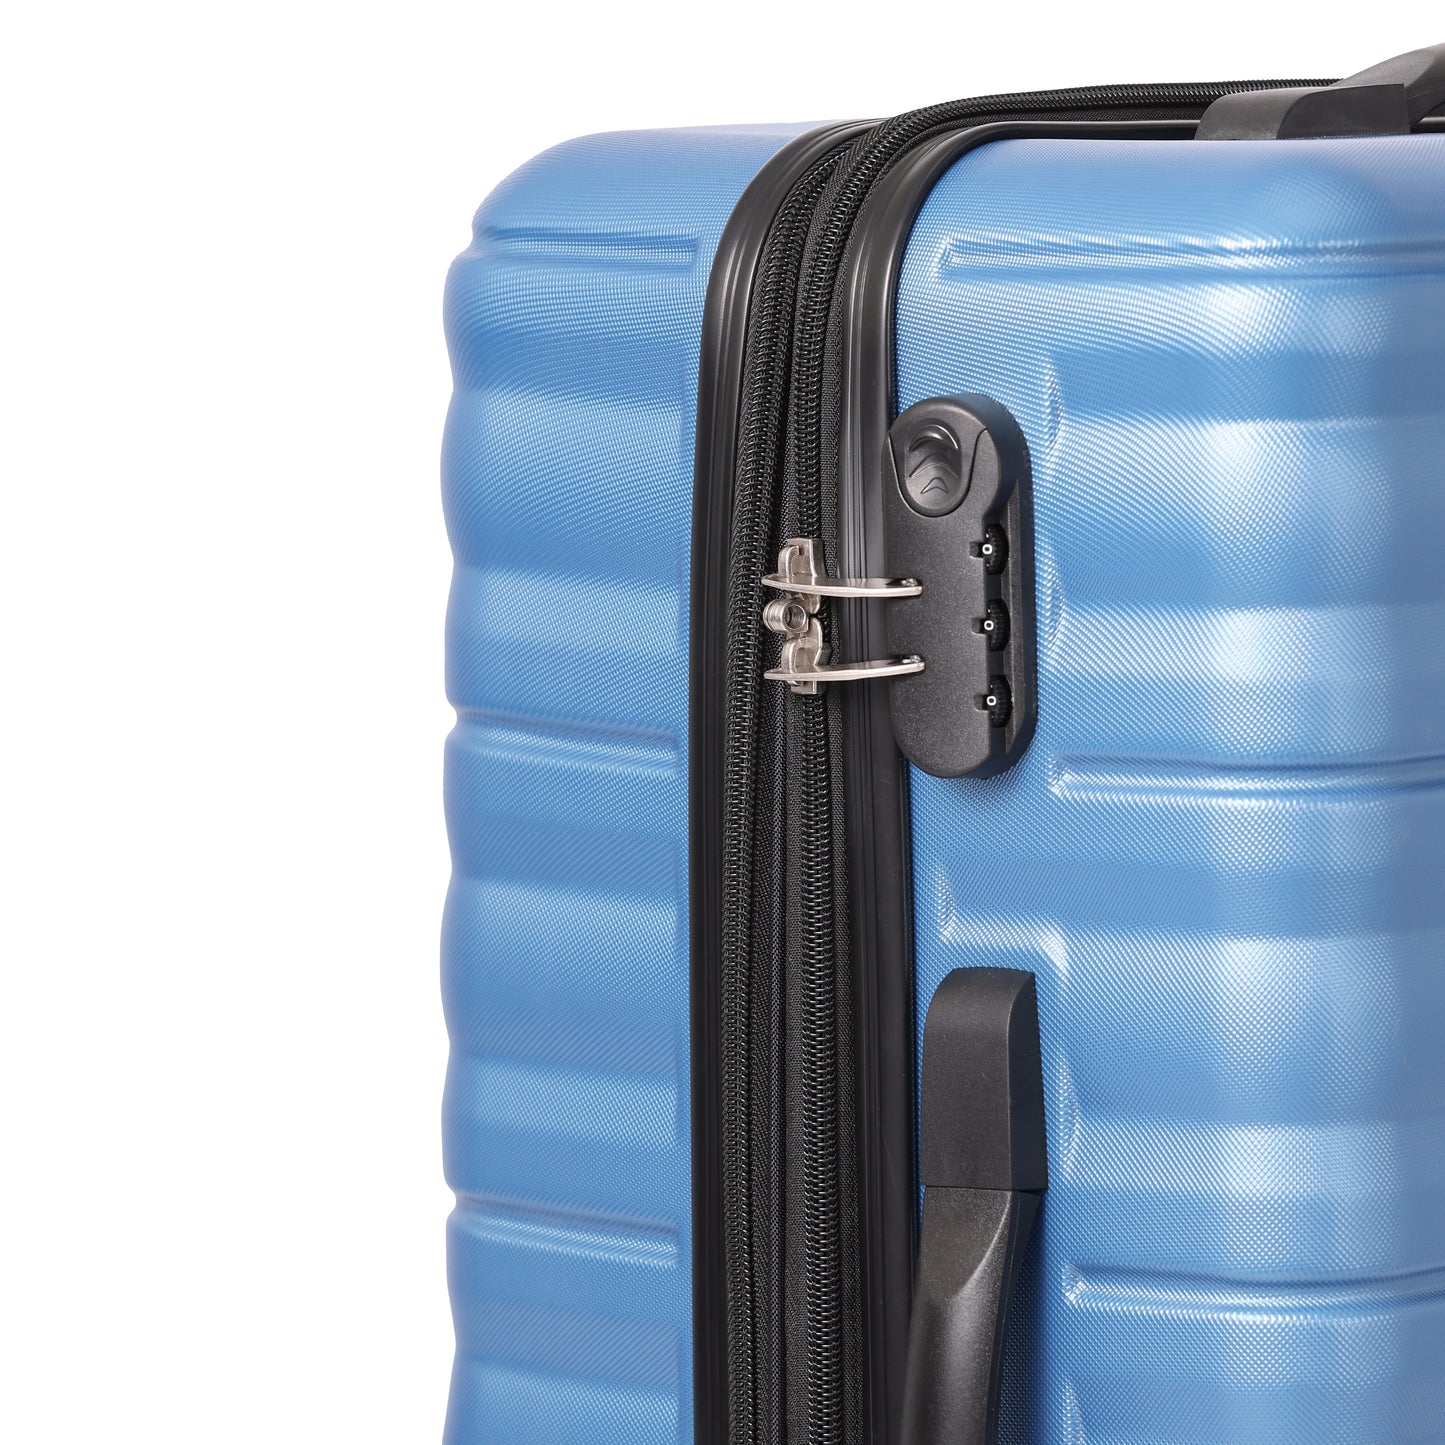 Cosmo Starline 28 Hard Luggage Trolley Case